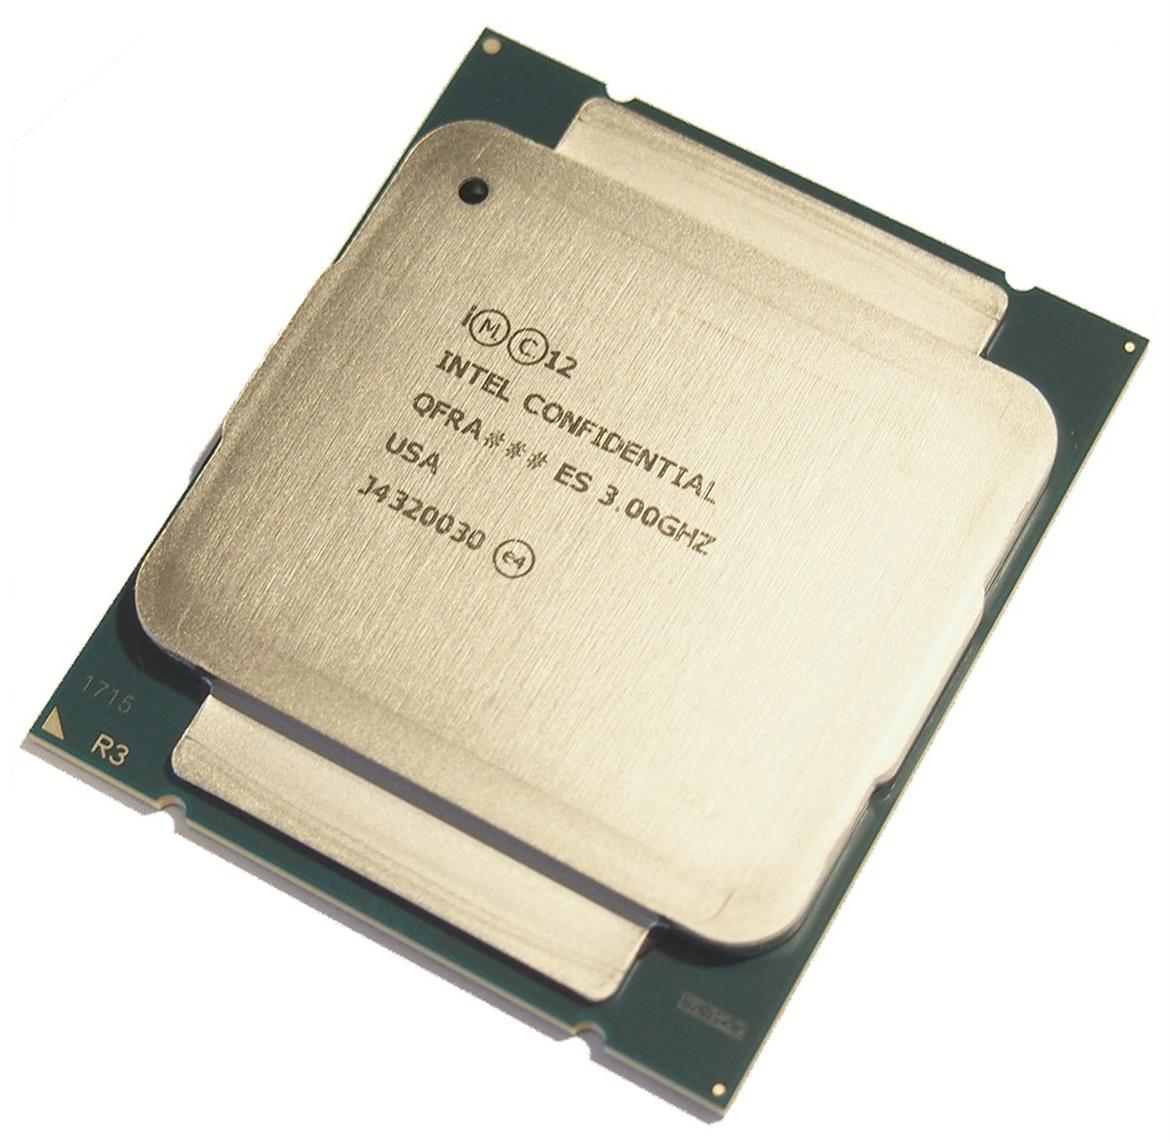 Haswell-E Debuts: Intel Core i7-5960X Processor Review